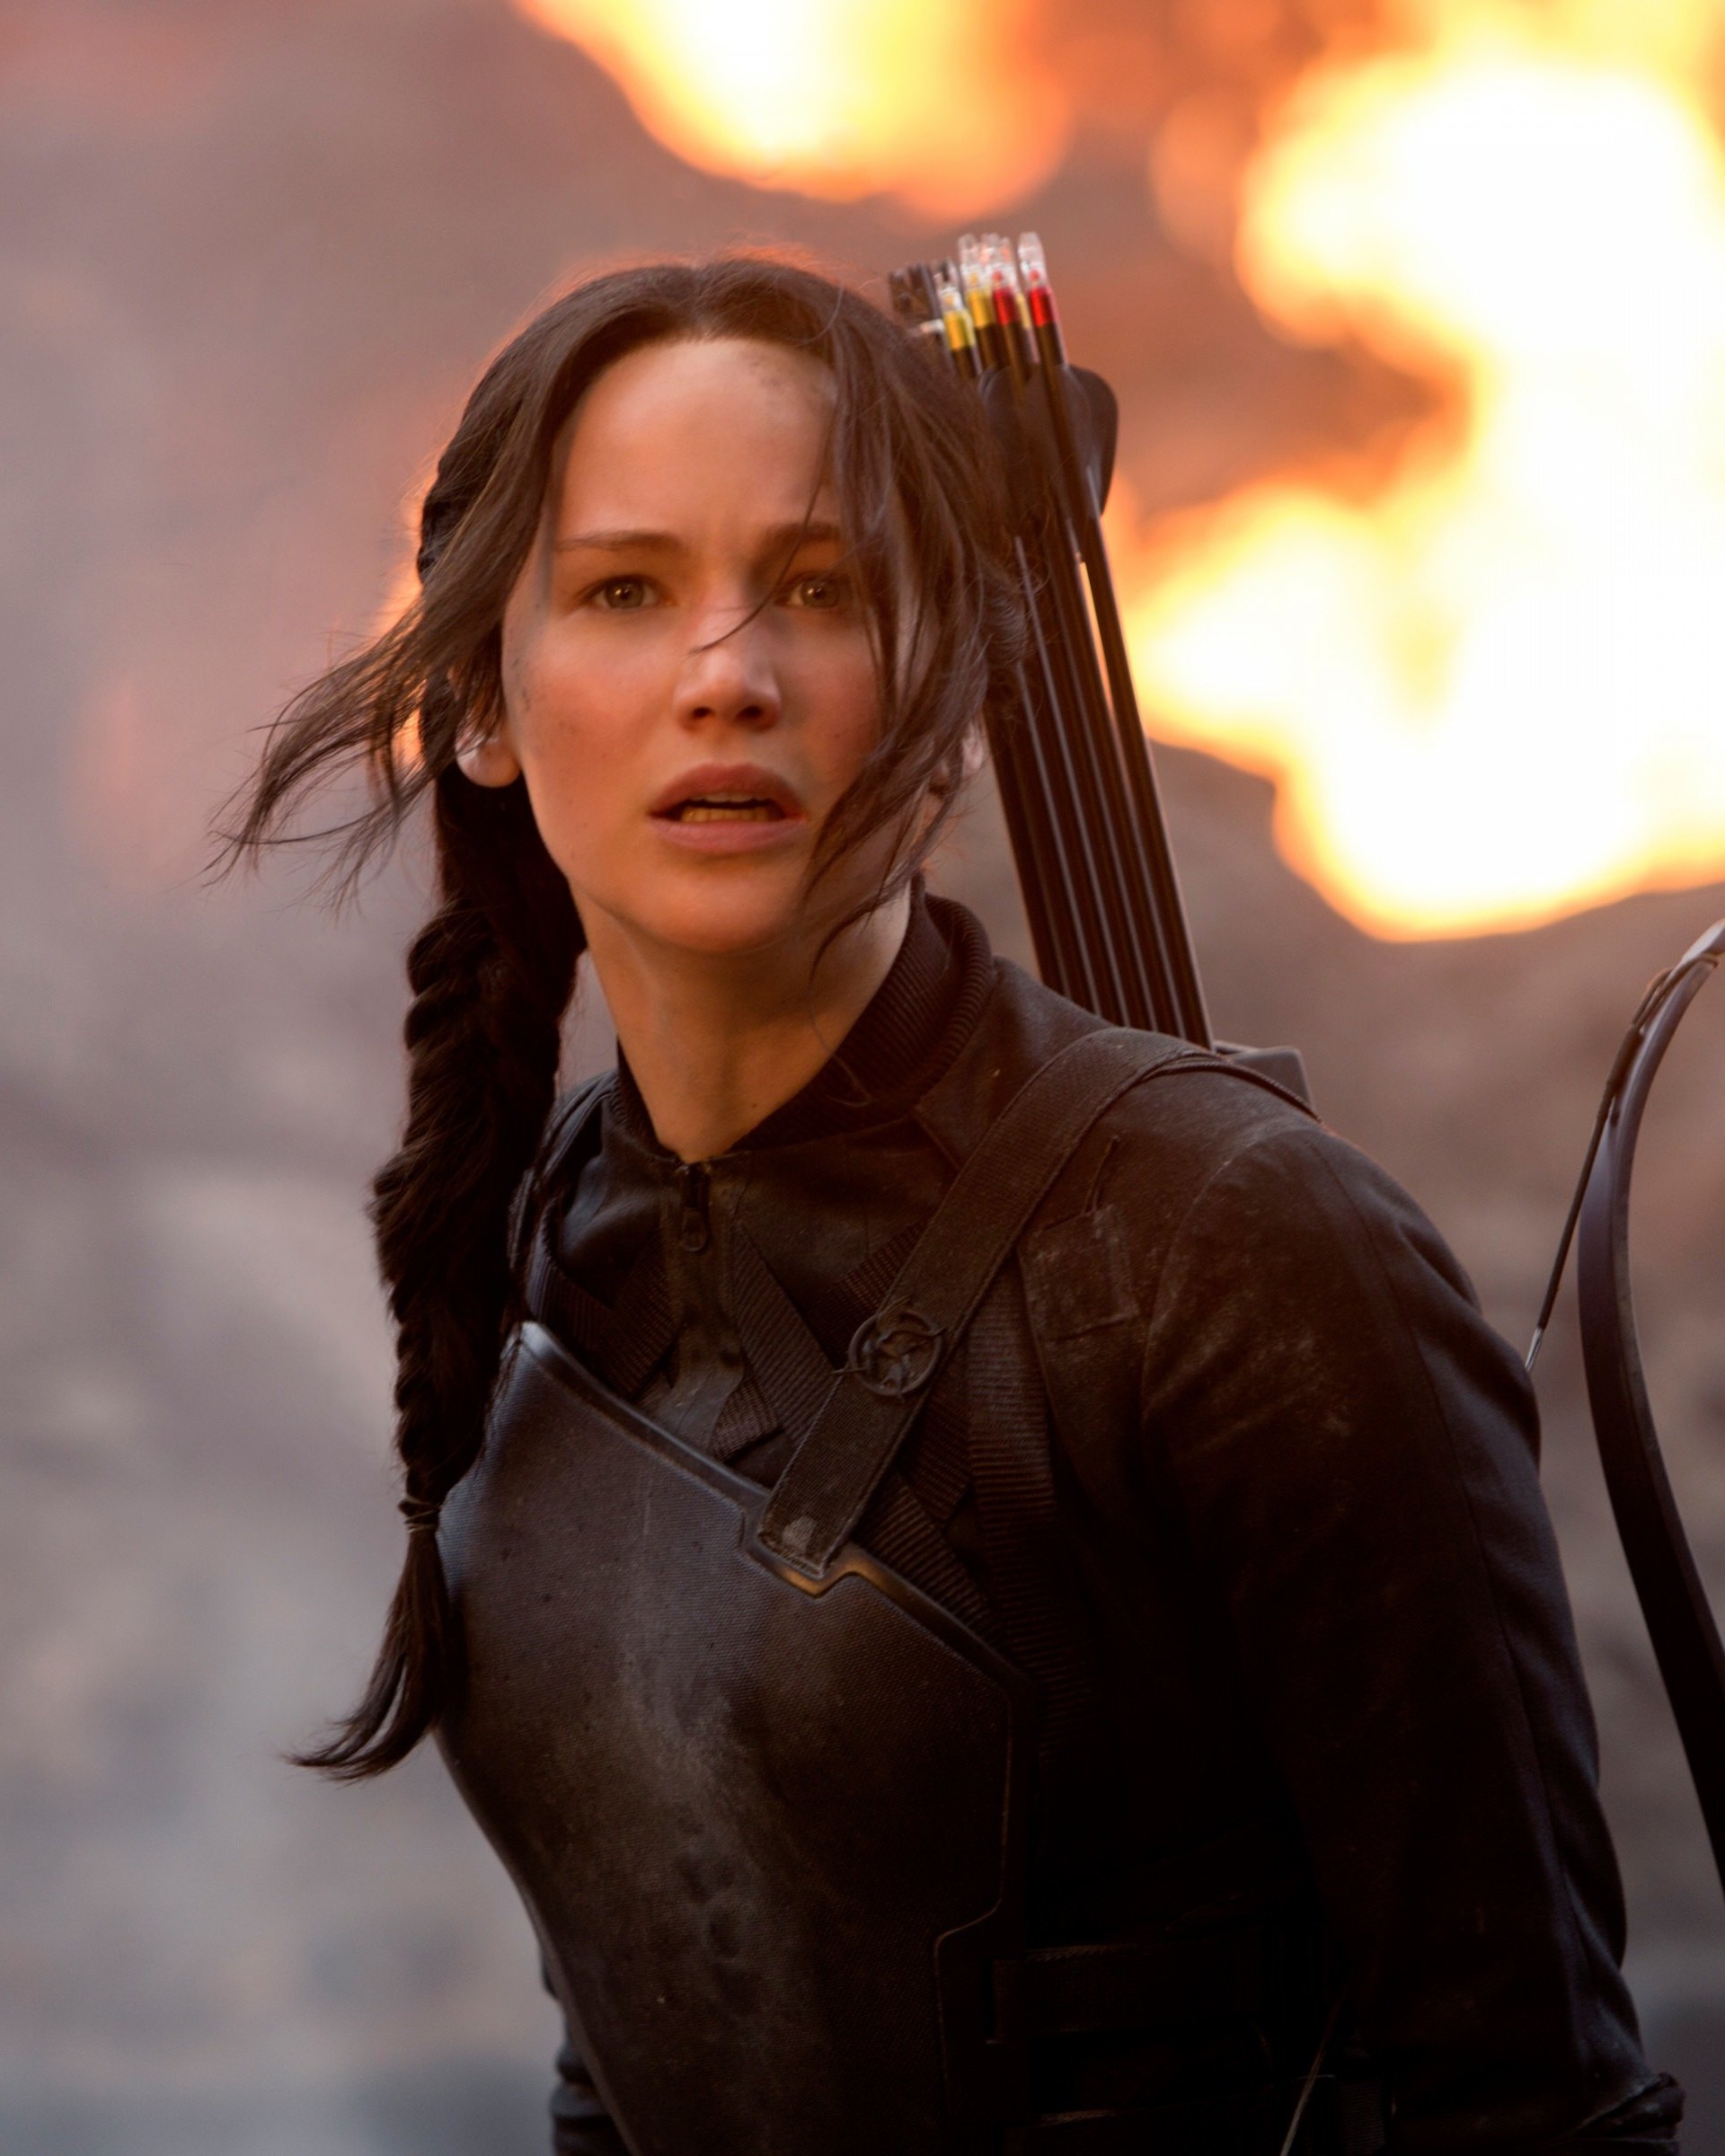 Jennifer Lawrence in The Hunger Games Wallpaper for Google Nexus 7